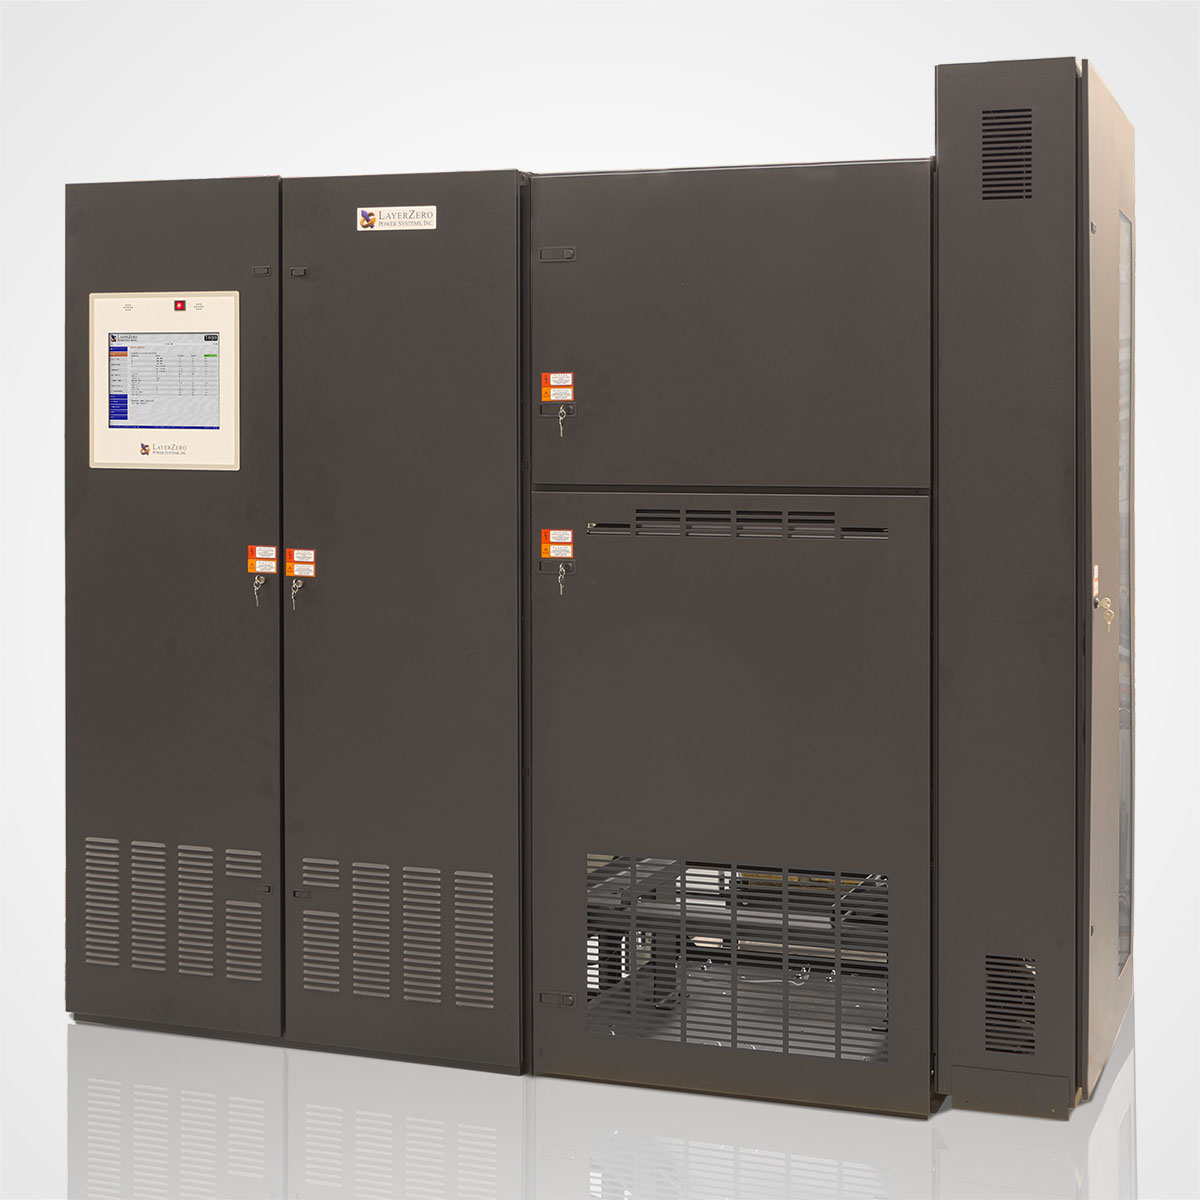 The LayerZero Series 70 ePODs: Type-P Power Distribution Unit (PDU) with Black Paint.